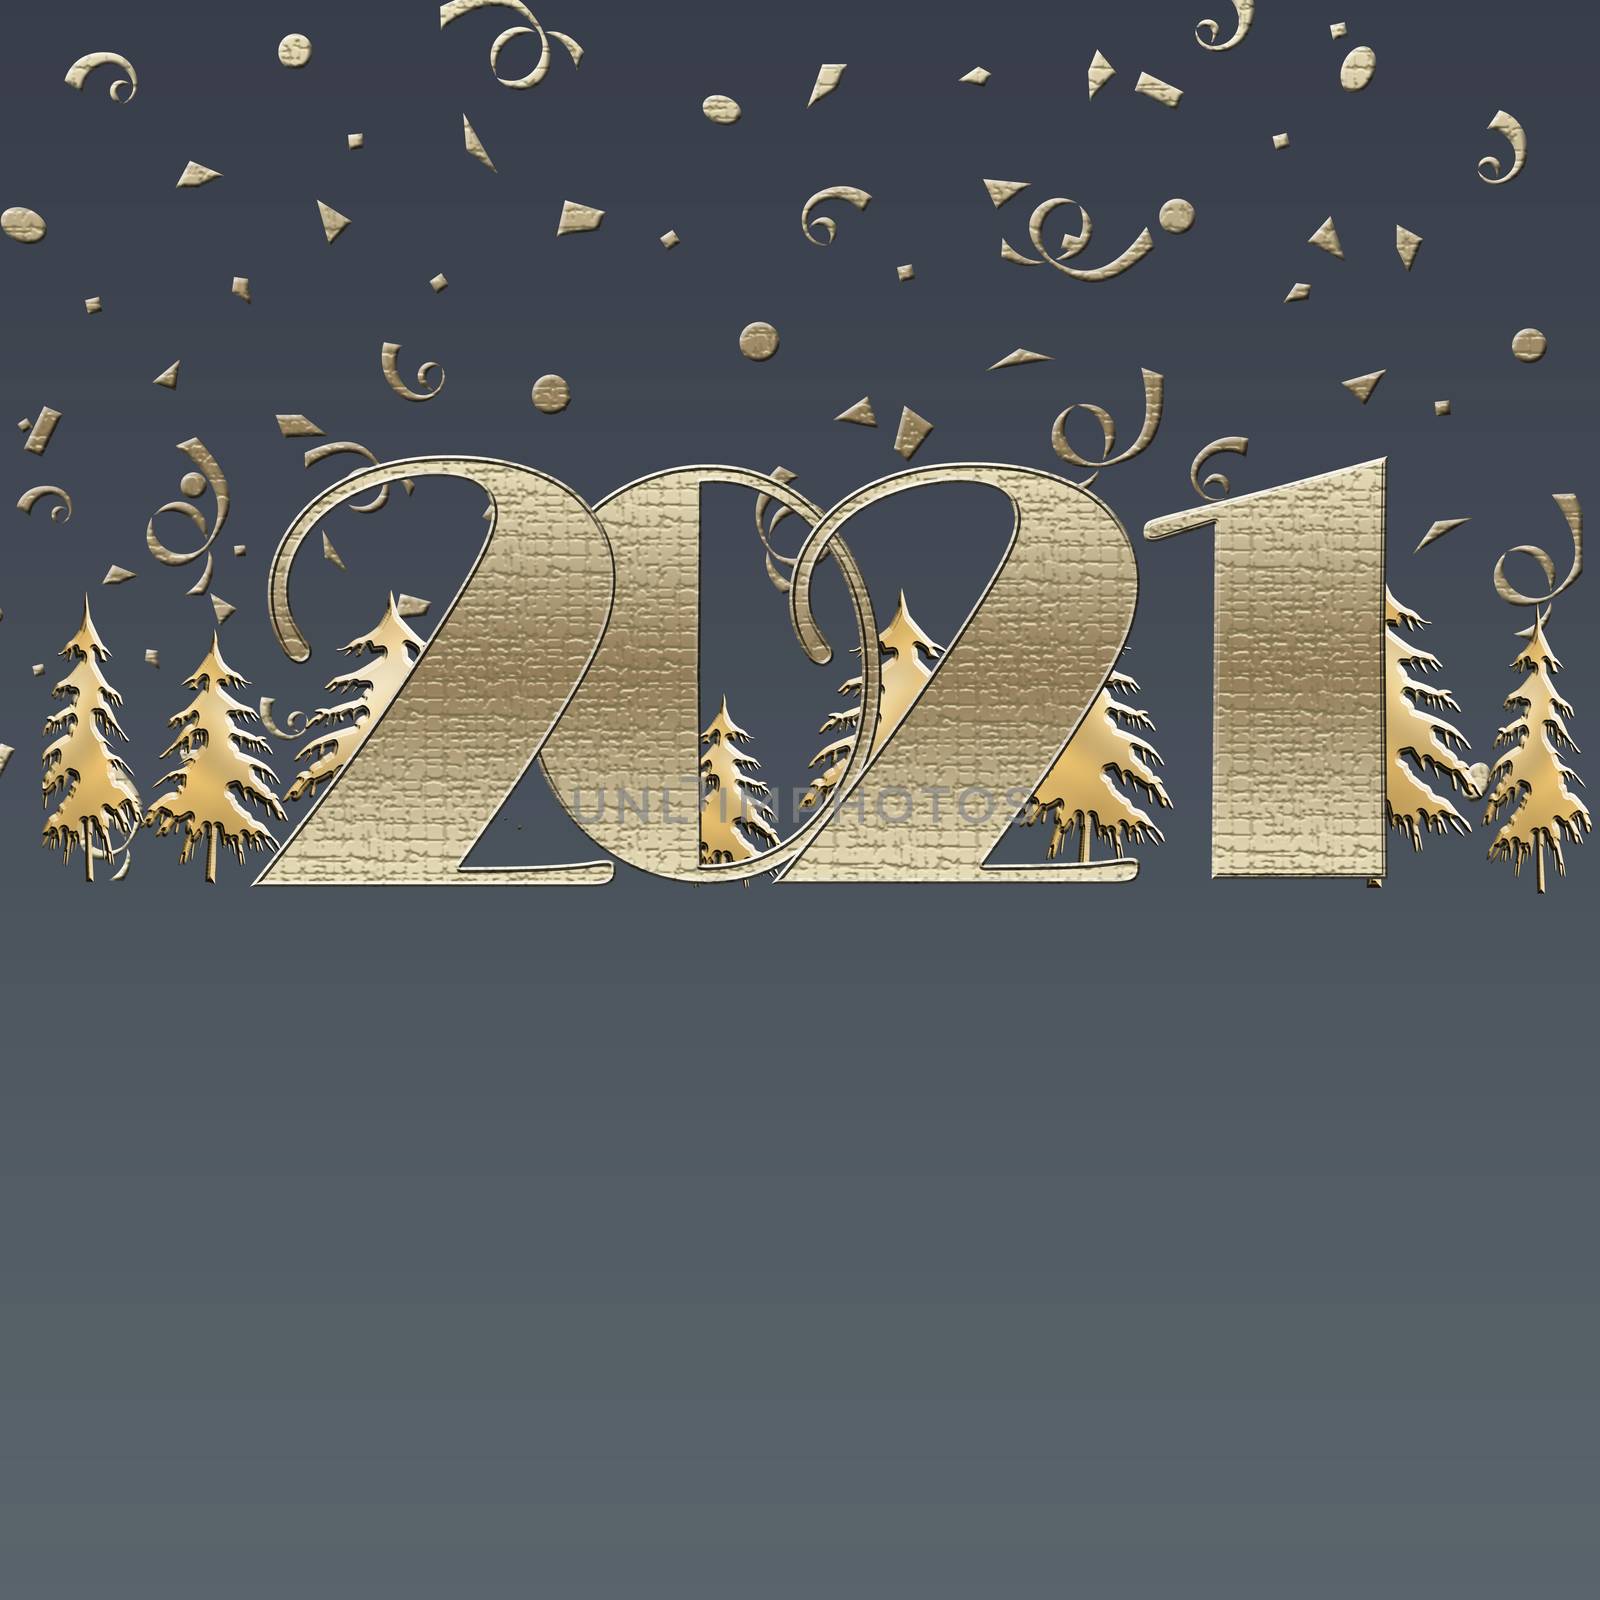 Happy new 2021 year, Merry Christmas elegant gold greeting card by NelliPolk